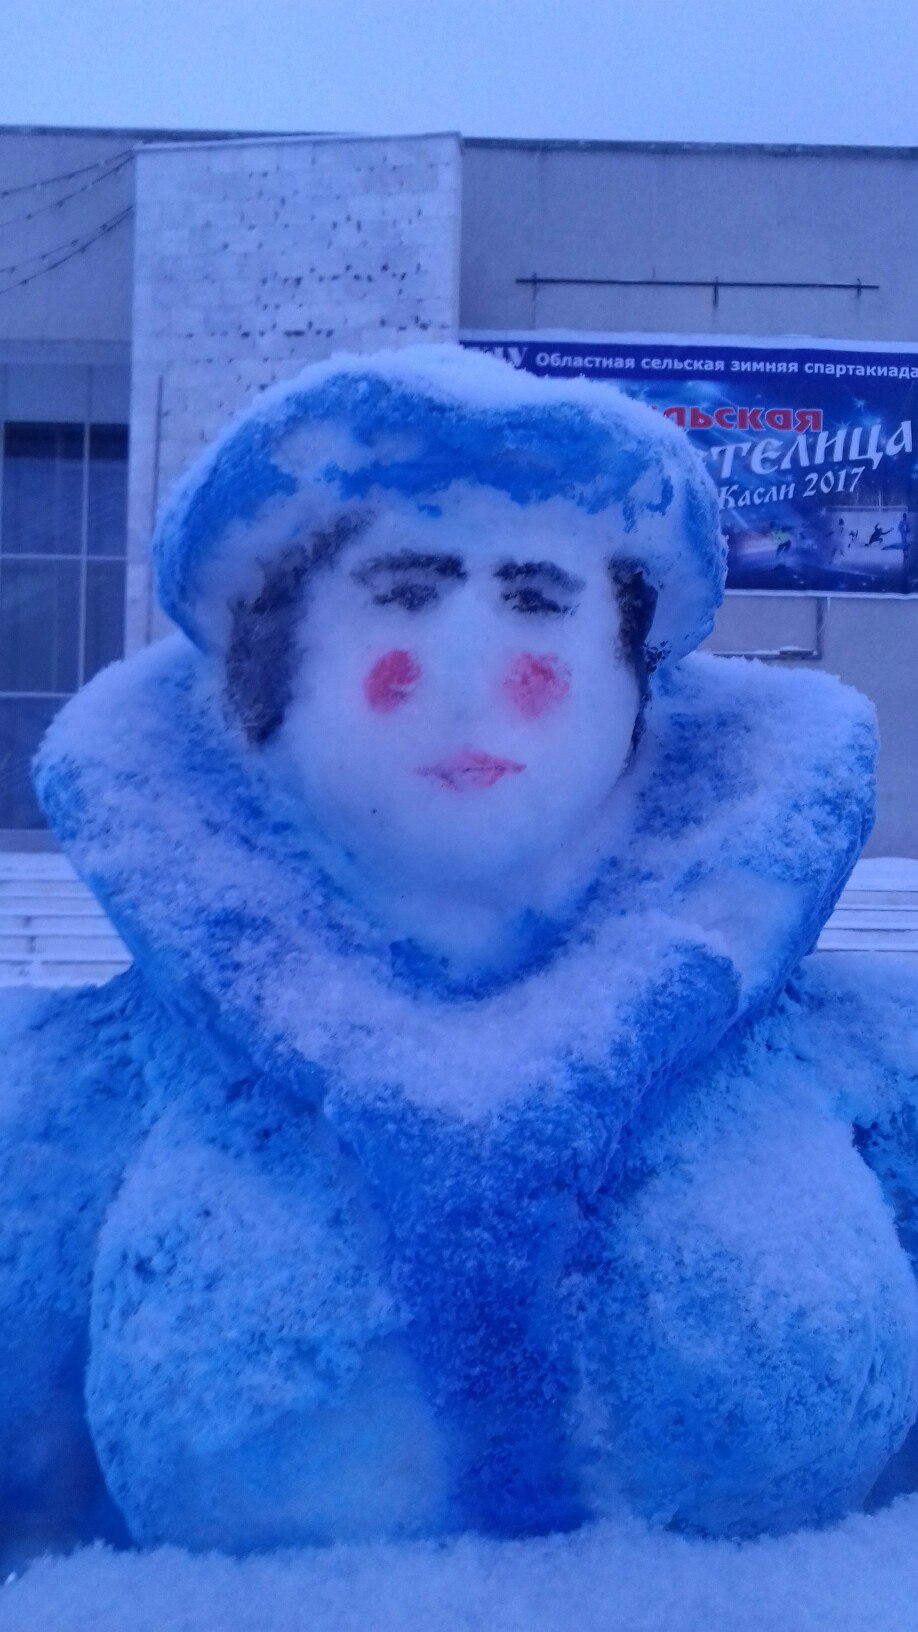 Snow Maiden from the Chelyabinsk region - Casley, Chelyabinsk region, Snow Maiden, New Year